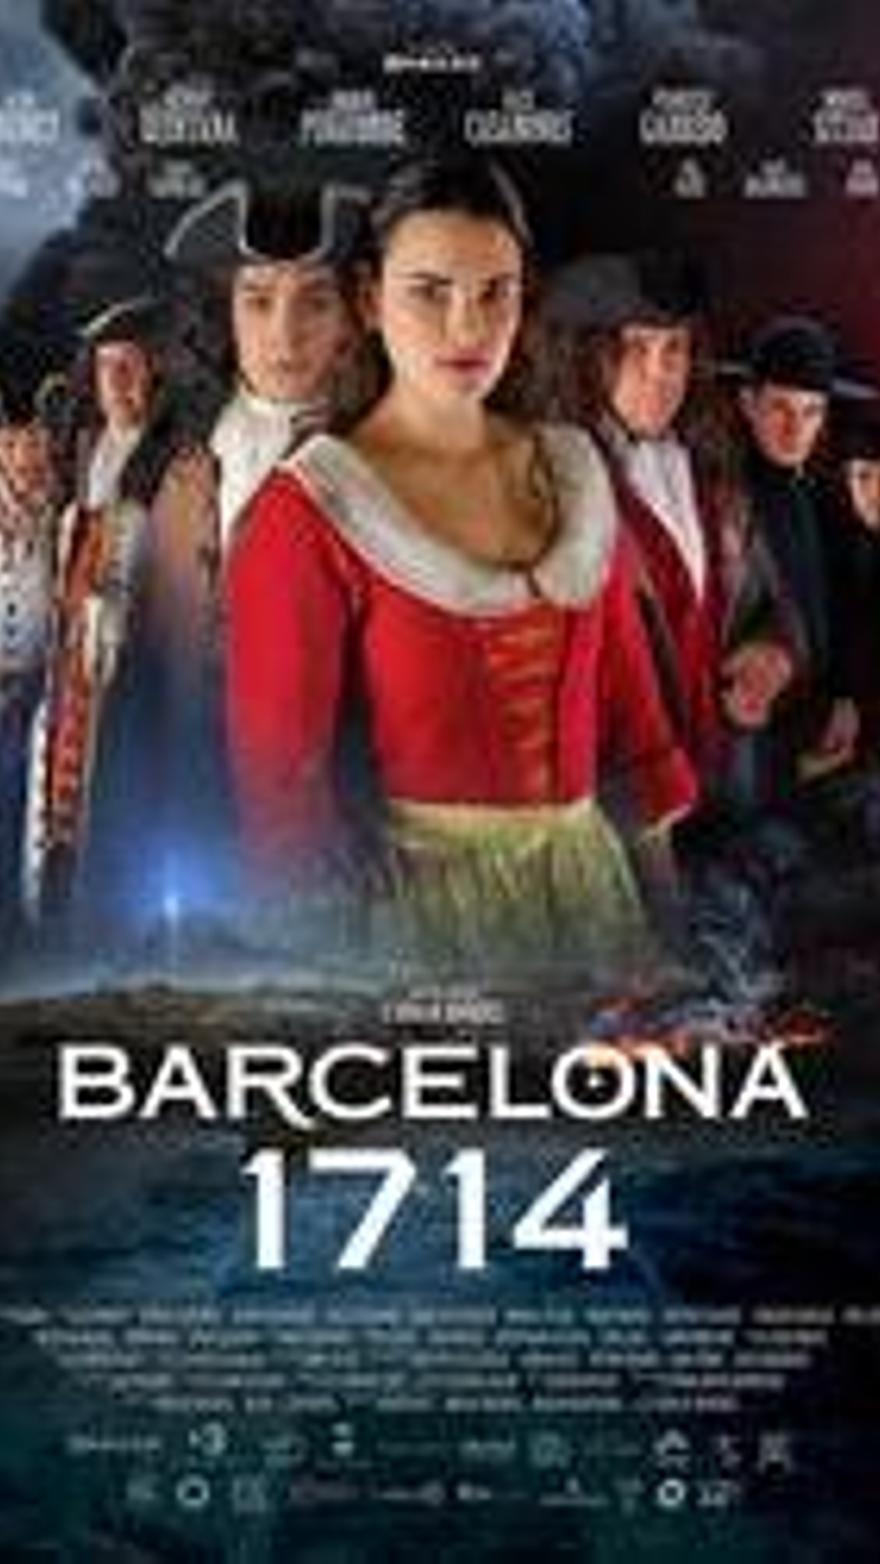 Barcelona 1714